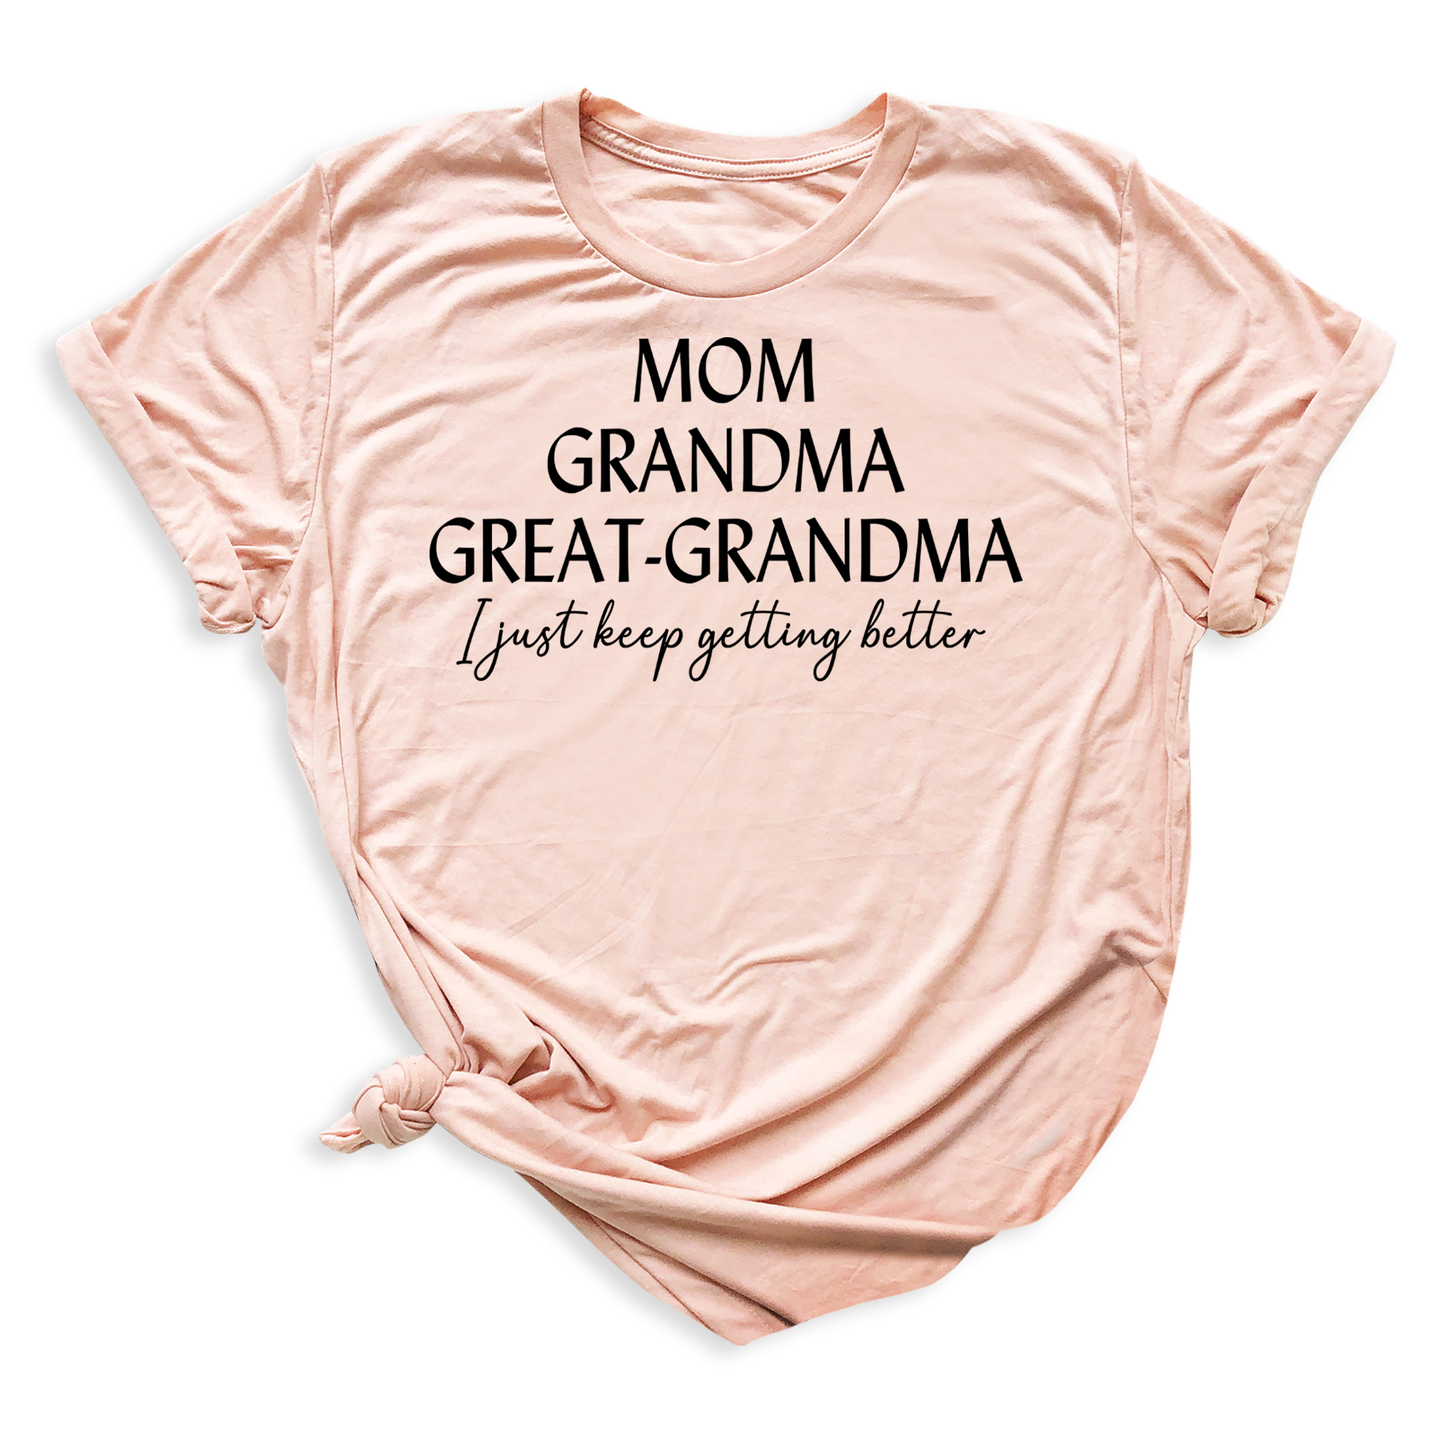 Mom Grandma Great Grandma T-Shirt